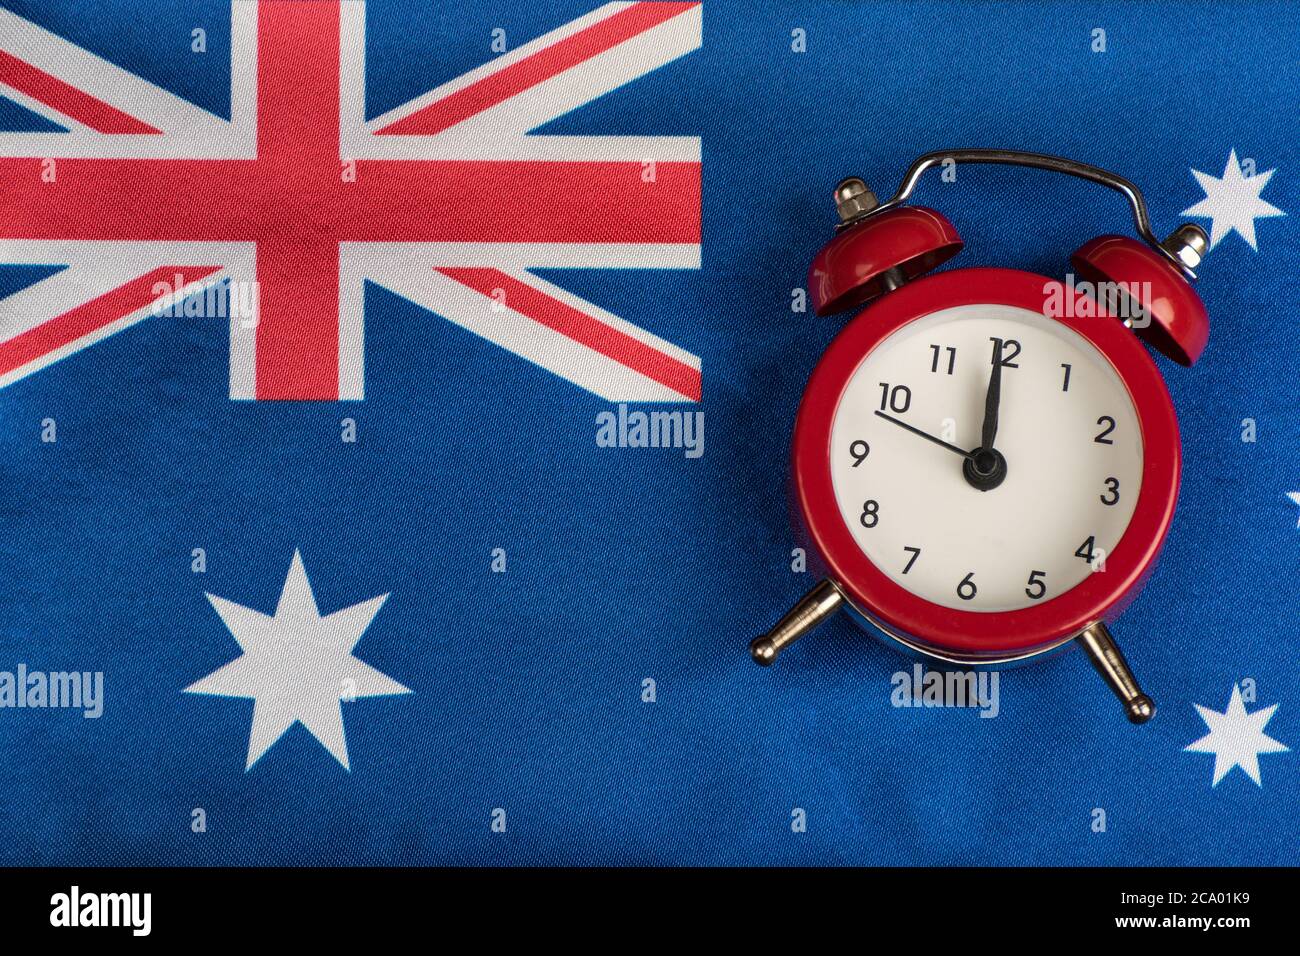 Australia flag and vintage alarm clock. to learn The Australian accent Photo -